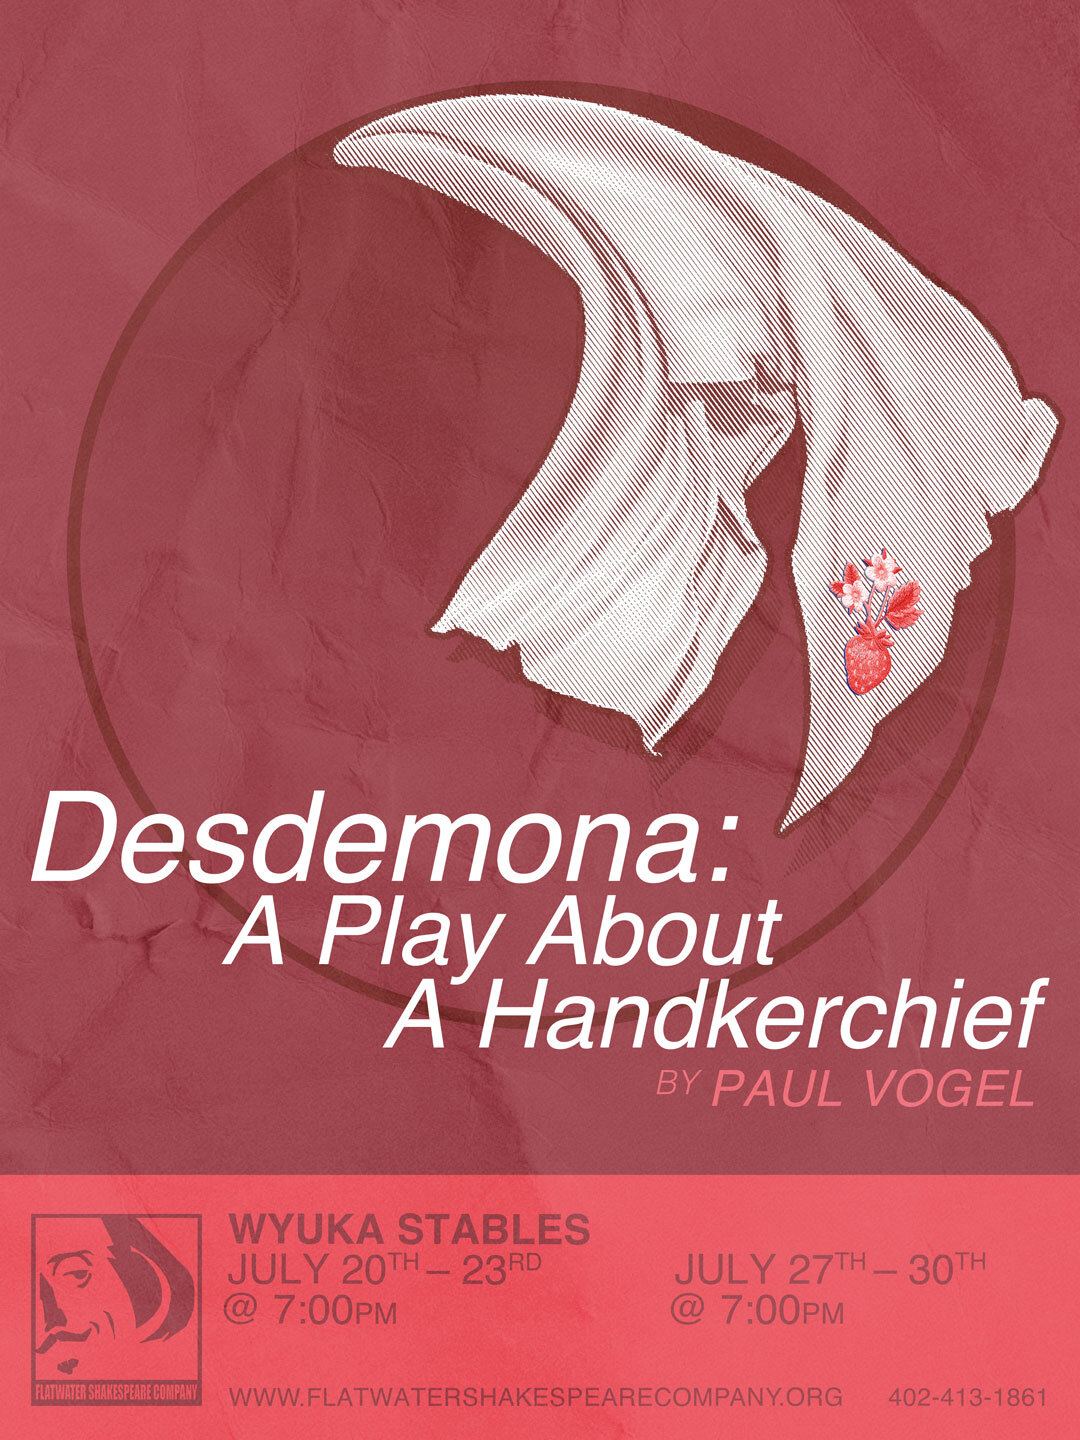 7/22 SEN - SENIOR (65+): Sat. July 22, 2023 | 7:00 p.m. - 10:00 p.m. CST | Wyuka Stables (Desdemona: A Play about a Handkerchief)